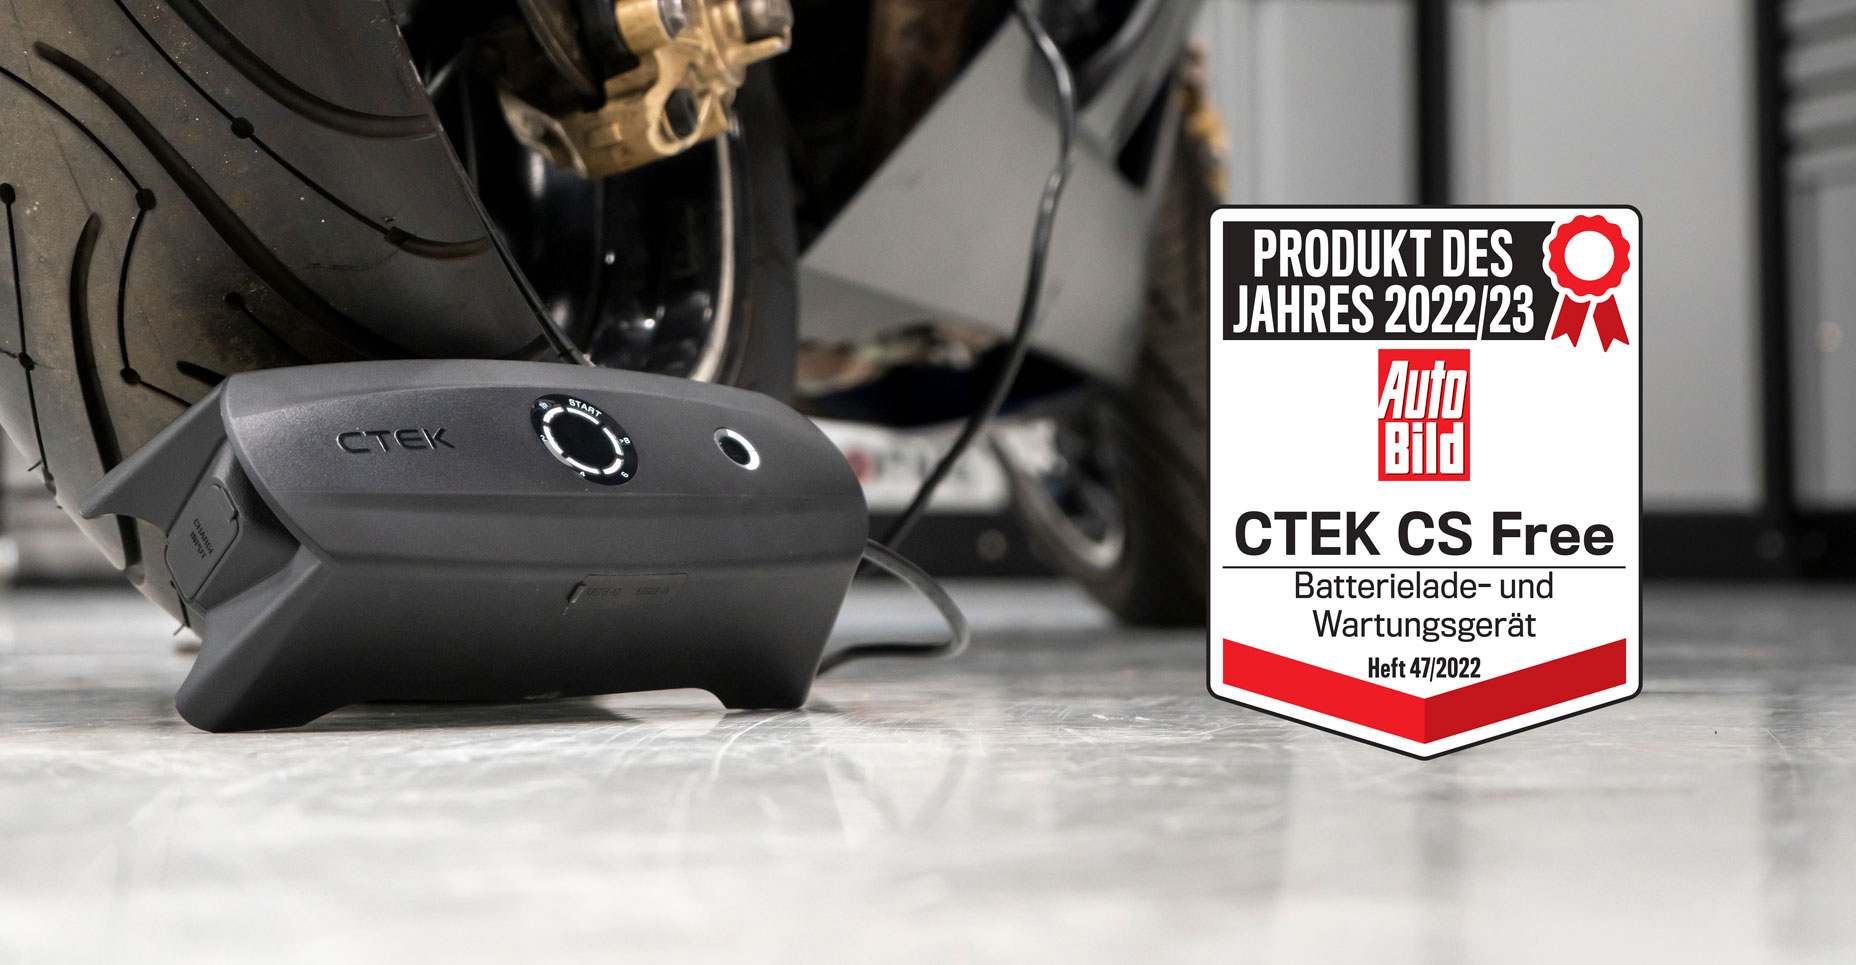 CTEK CS FREE Multifunktionales 4-in-1 tragbares Batterieladegerät 12V mit Adaptive Boost-Technologie, Artikelnr. 40-462 - ctek.com